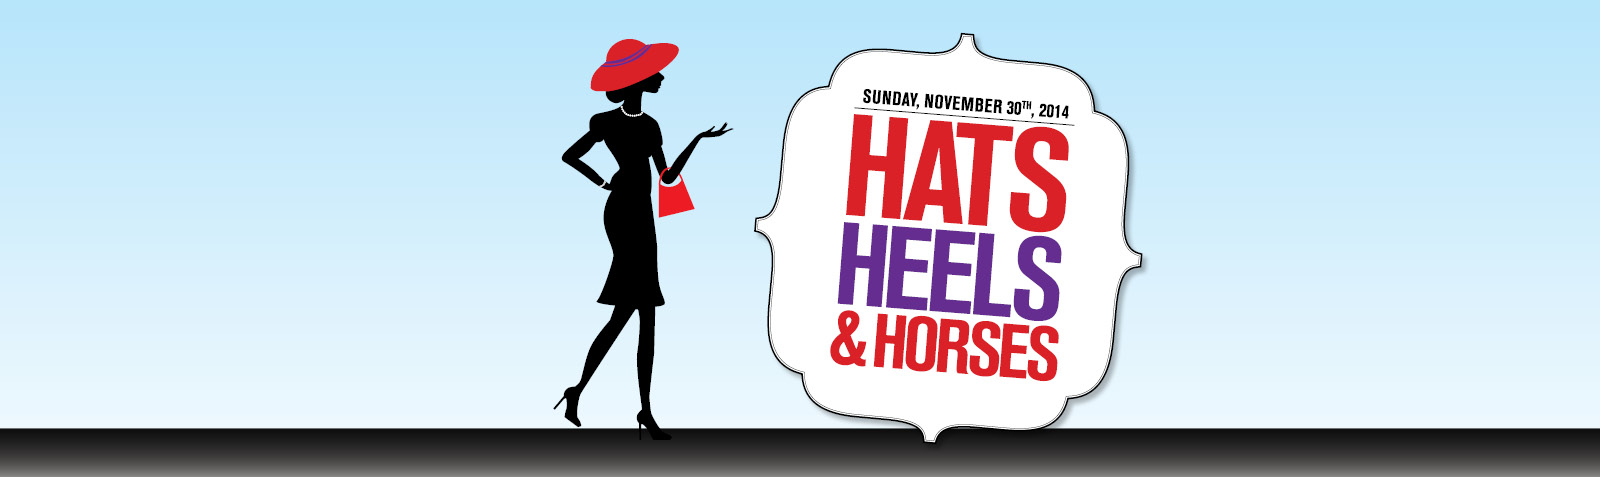 Hats-Heels-Horses-Nov-2014WebSlider_1600x477